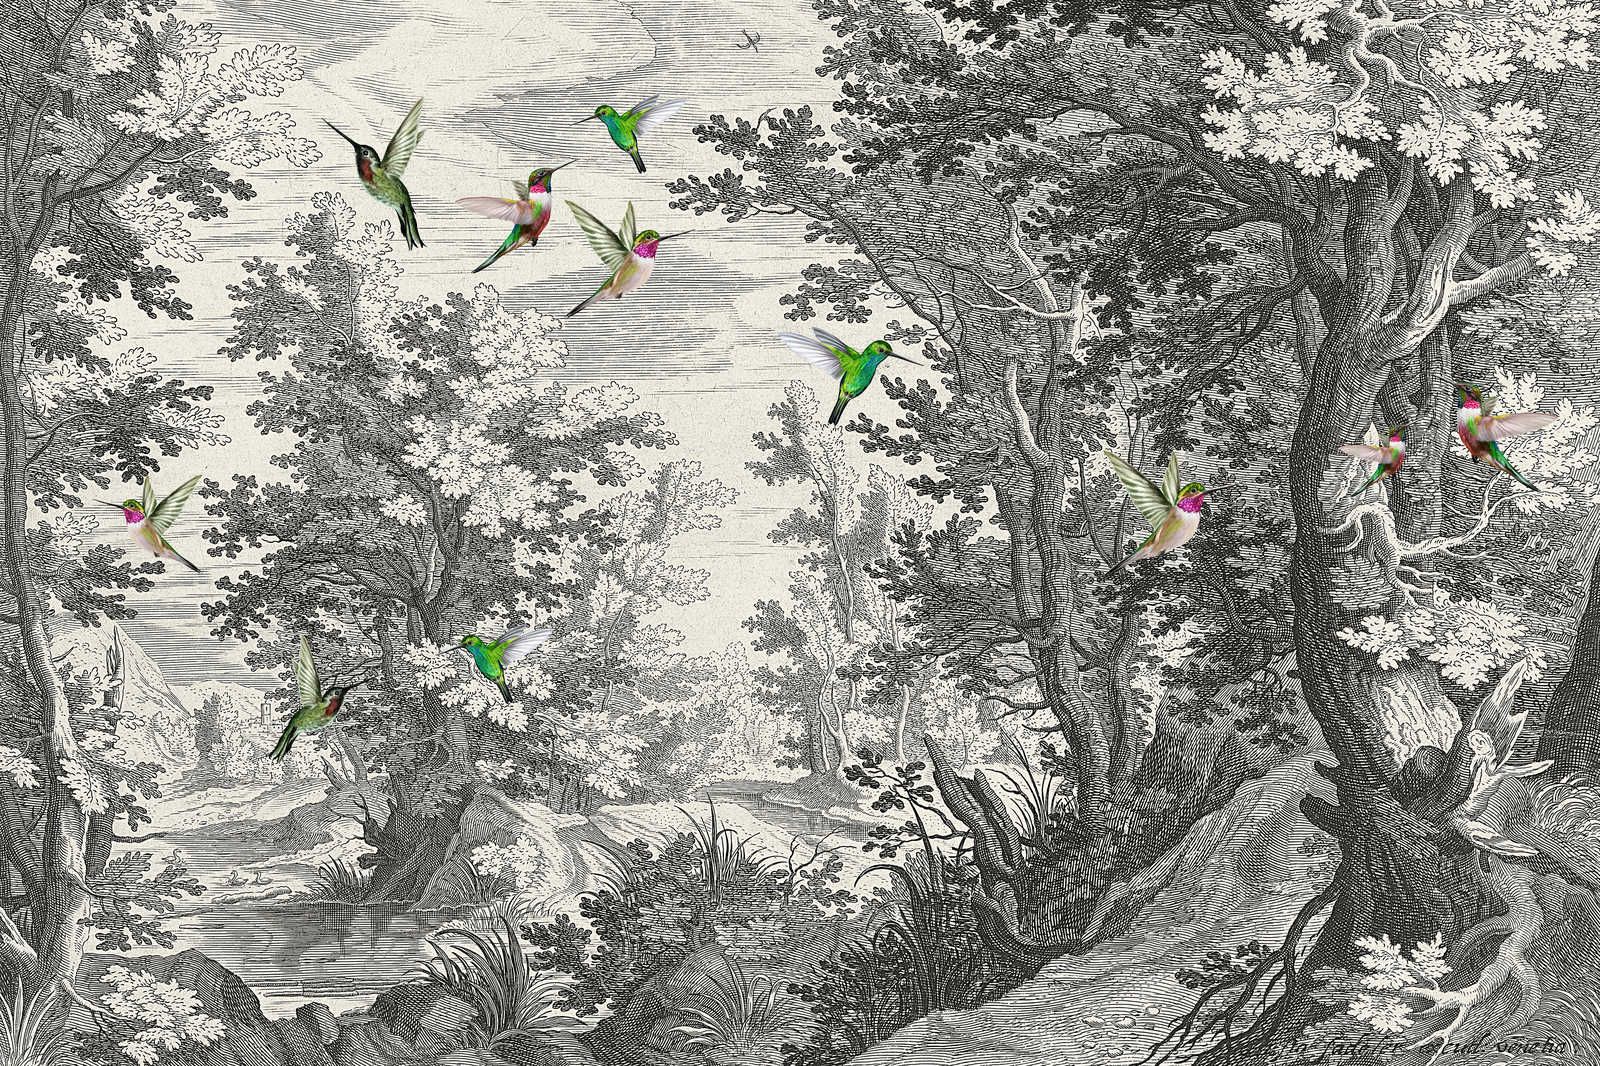             Fancy Forest 1 - Landscape Canvas Print with Birds - 0.90 m x 0.60 m
        